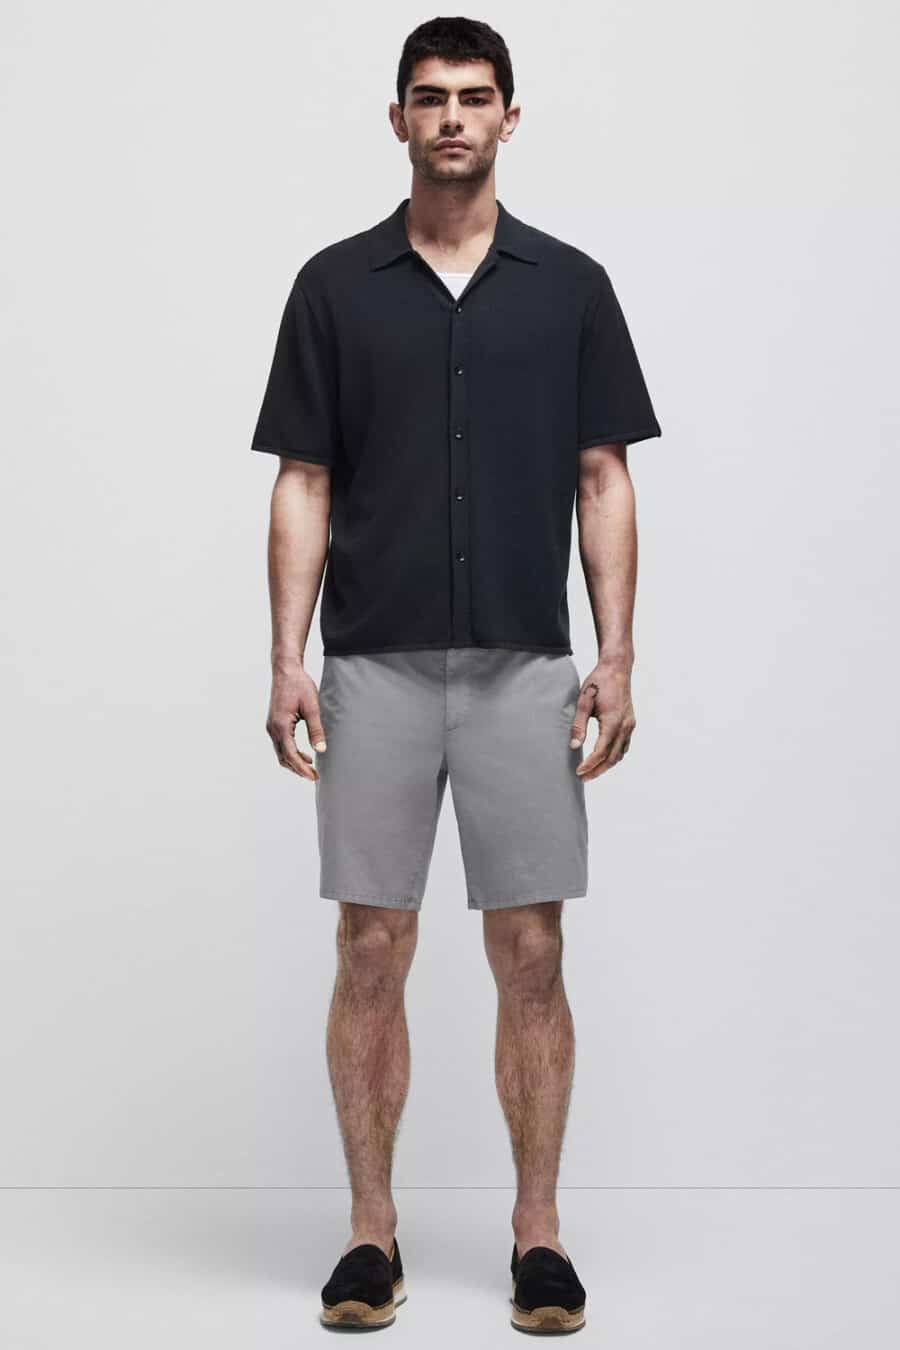 Men's grey shorts, short sleeve black shirt and black espadrilles outfit